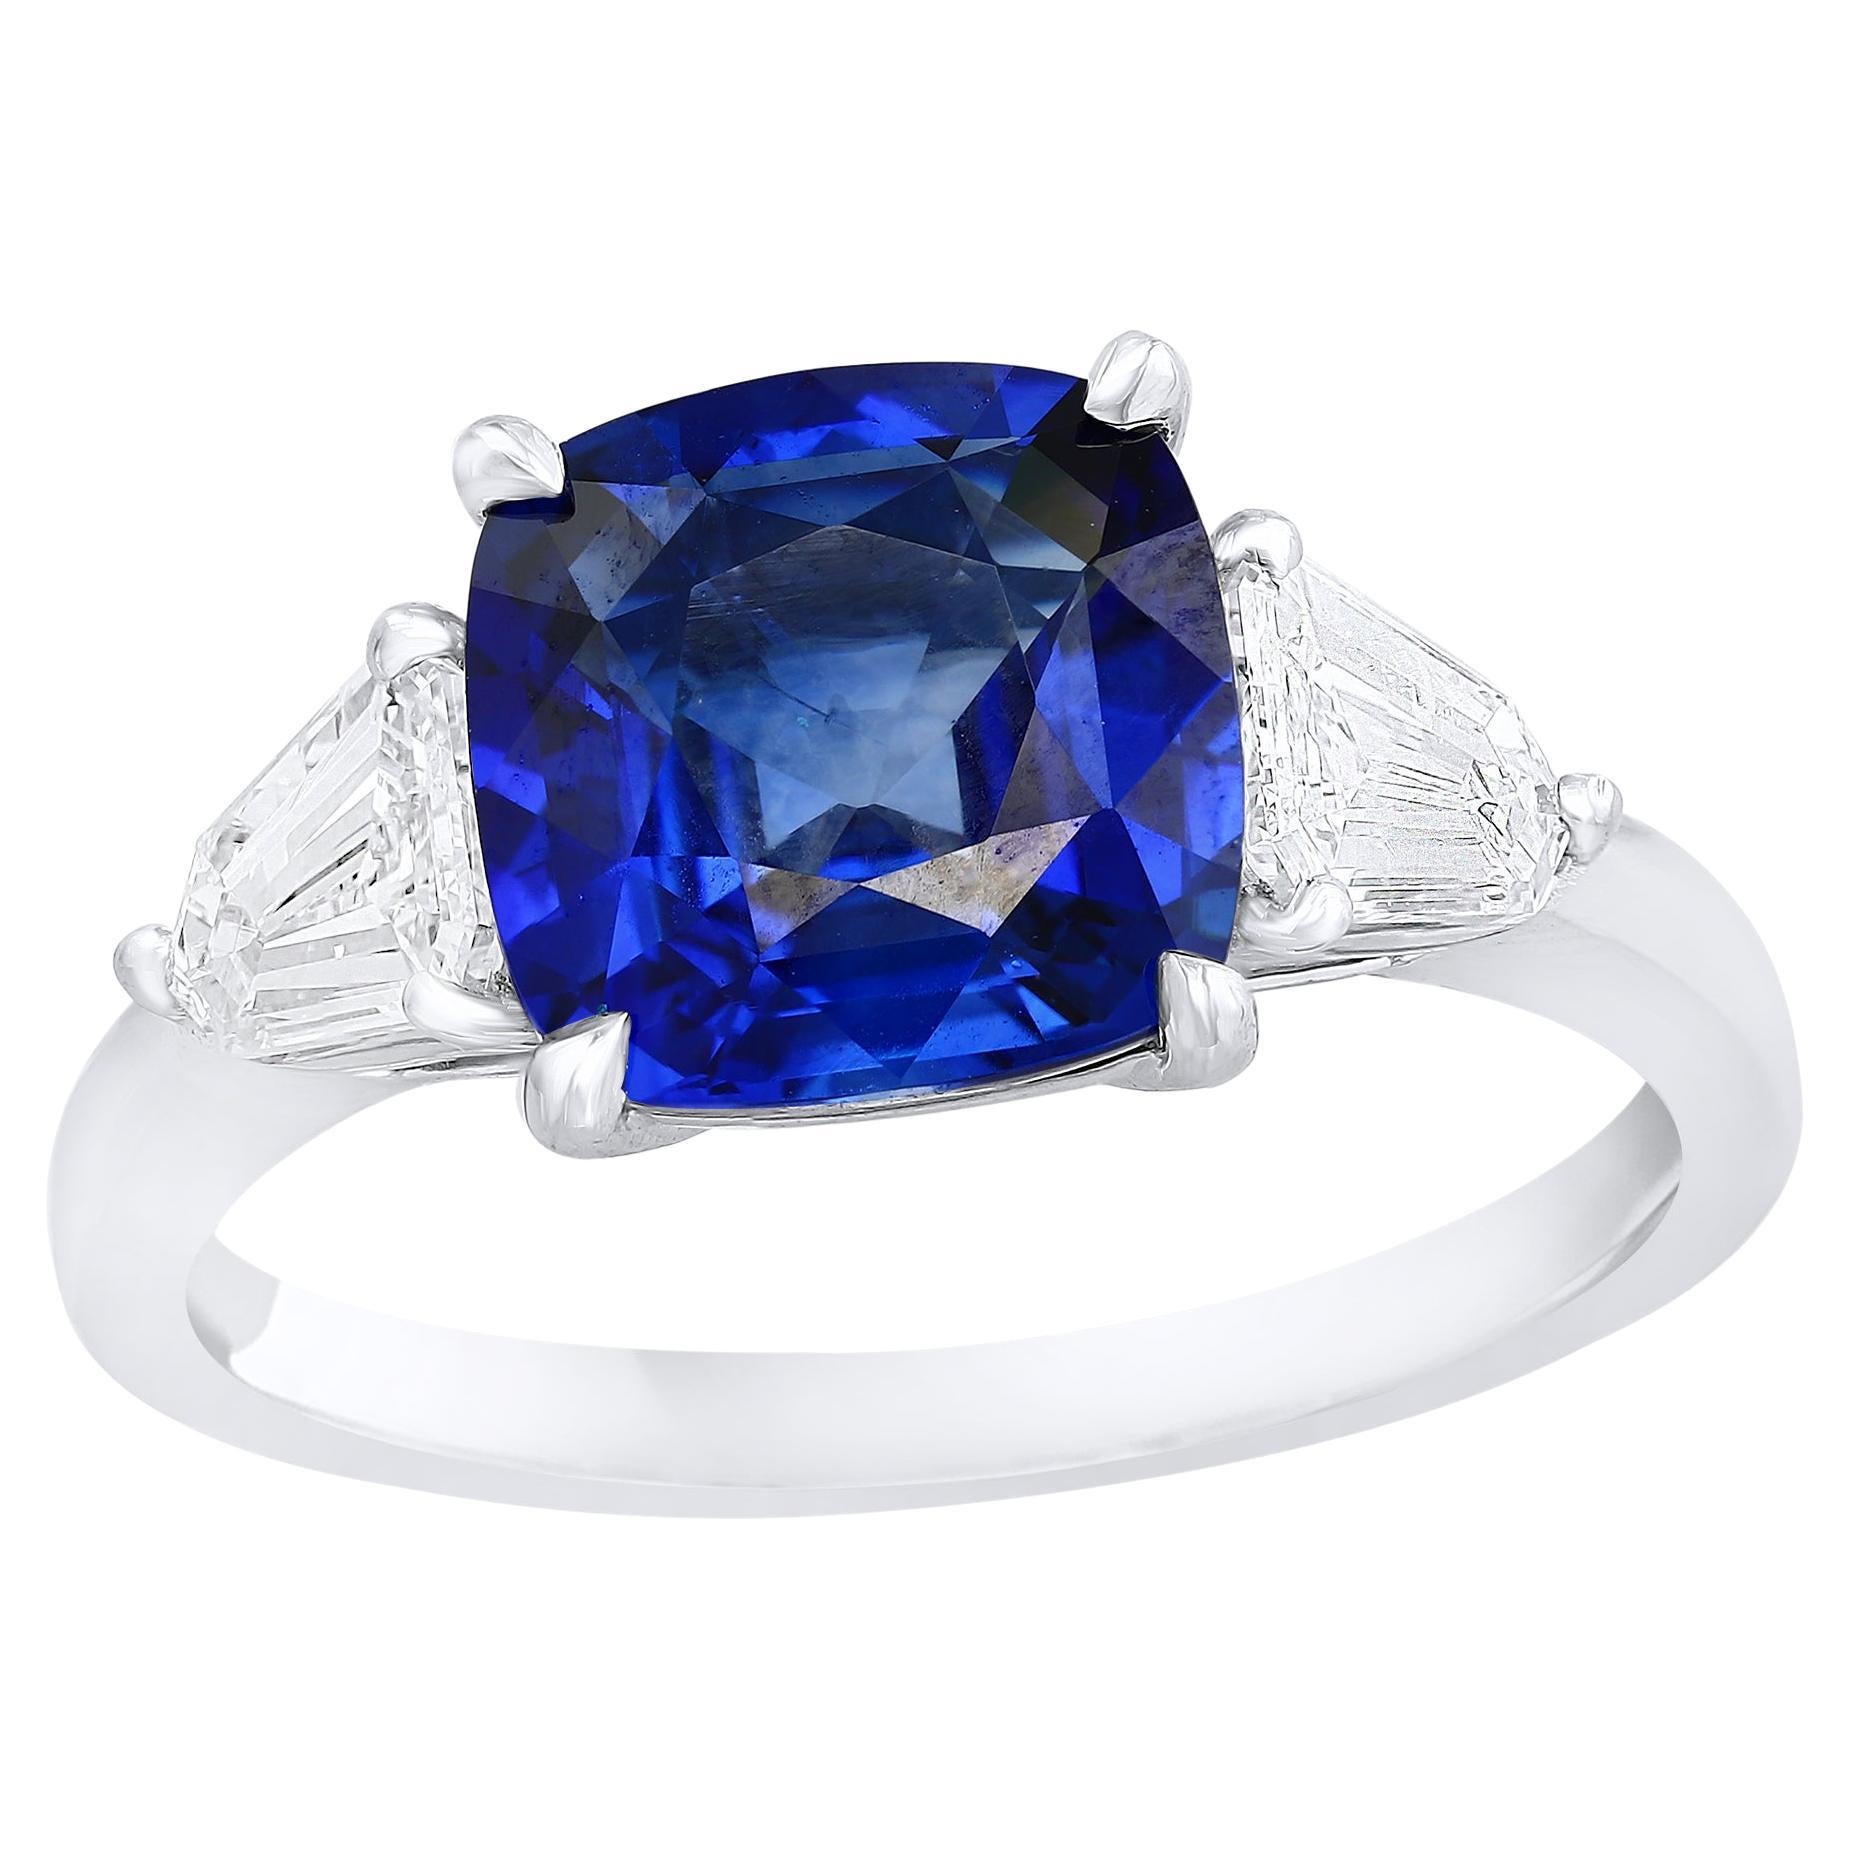 2.60 Carat Cushion Cut Blue Sapphire Diamond Three-Stone Ring in Platinum